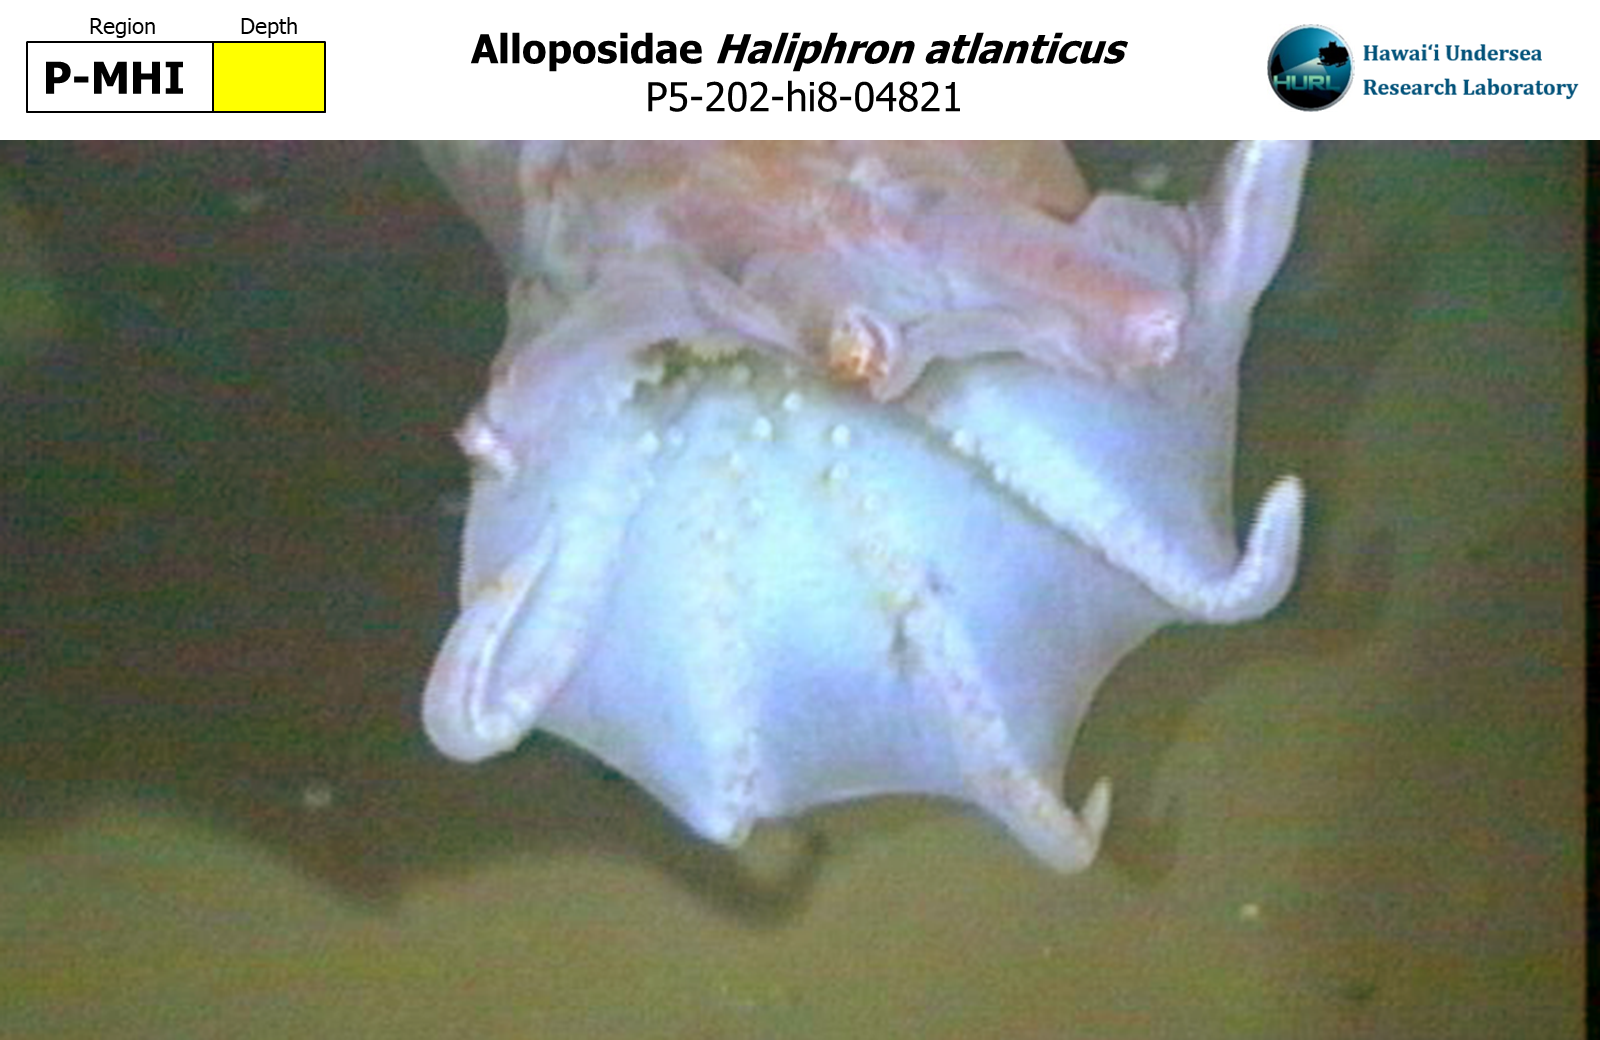 Haliphron atlanticus